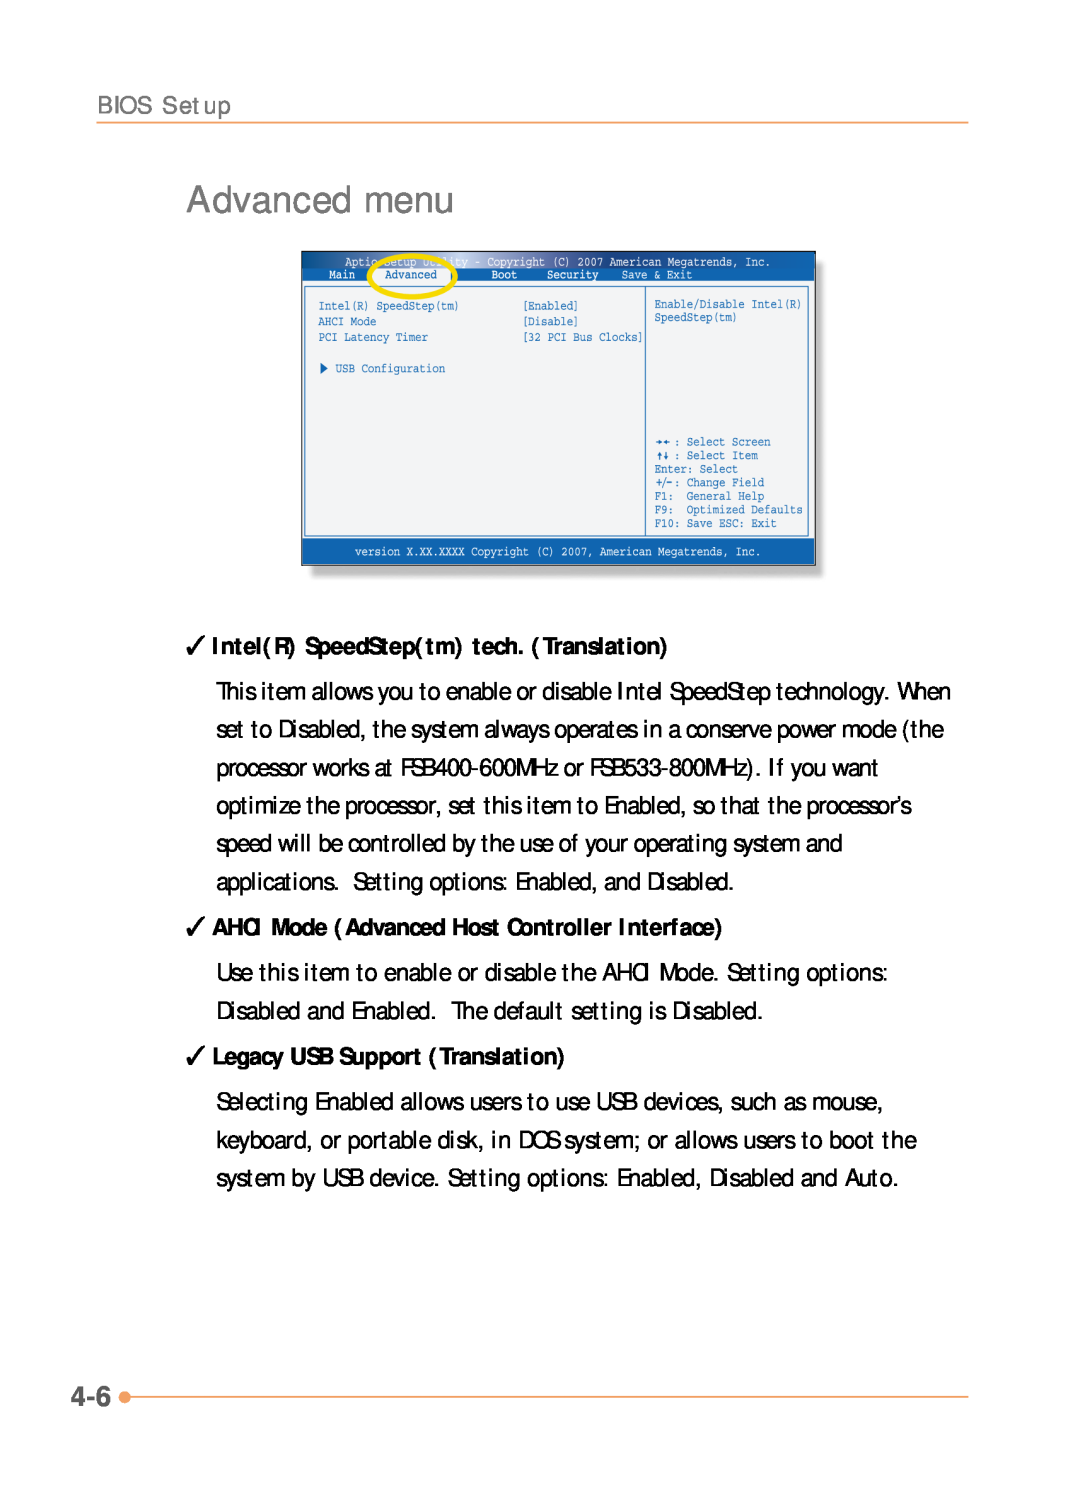 AVERATEC N1000 Series Advanced menu, IntelR SpeedSteptm tech. Translation, AHCI Mode Advanced Host Controller Interface 